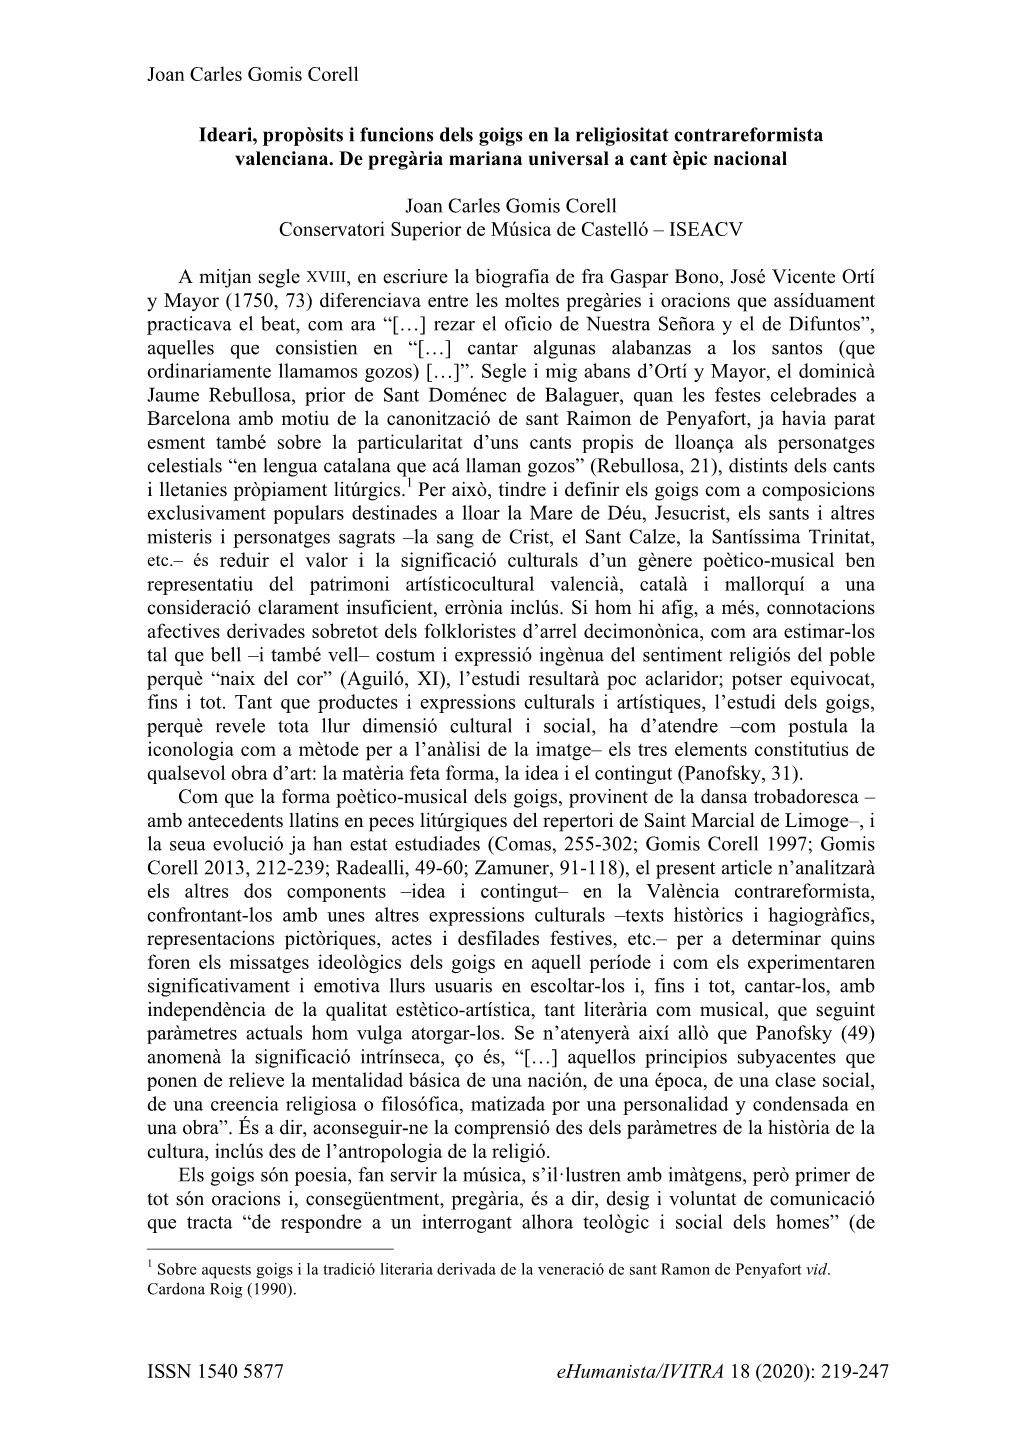 Joan Carles Gomis Corell ISSN 1540 5877 Ehumanista/IVITRA 18